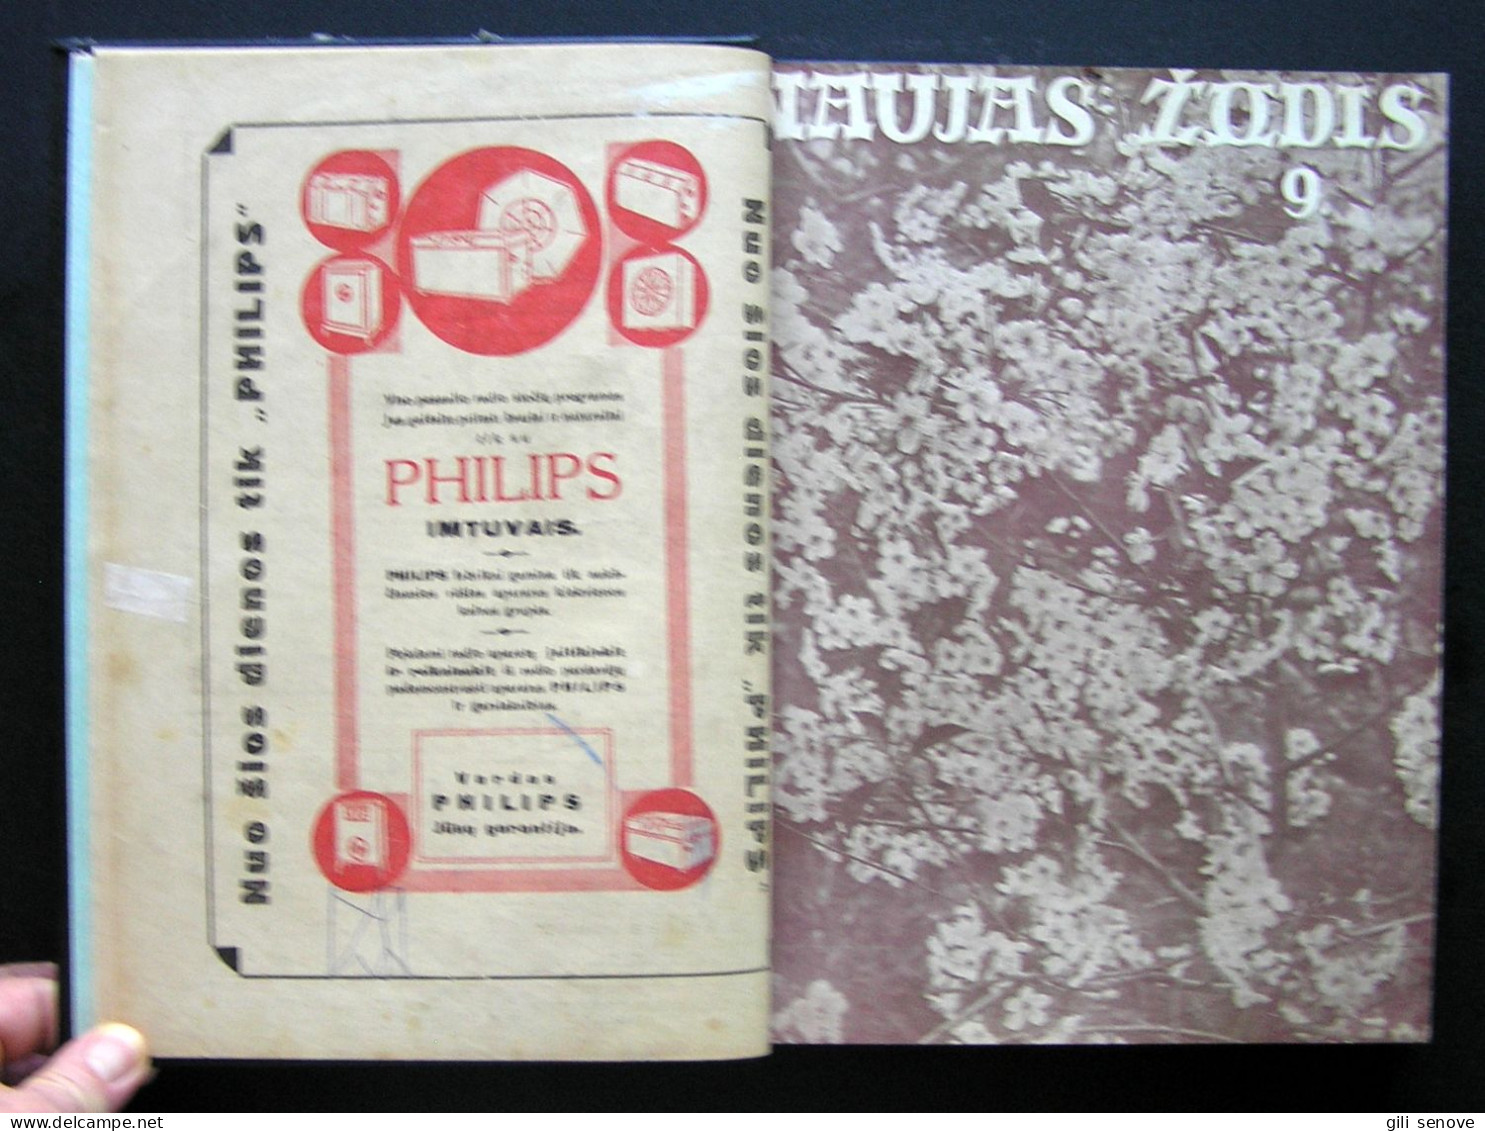 Lithuanian Magazine / Naujas žodis 1929-1932 - General Issues